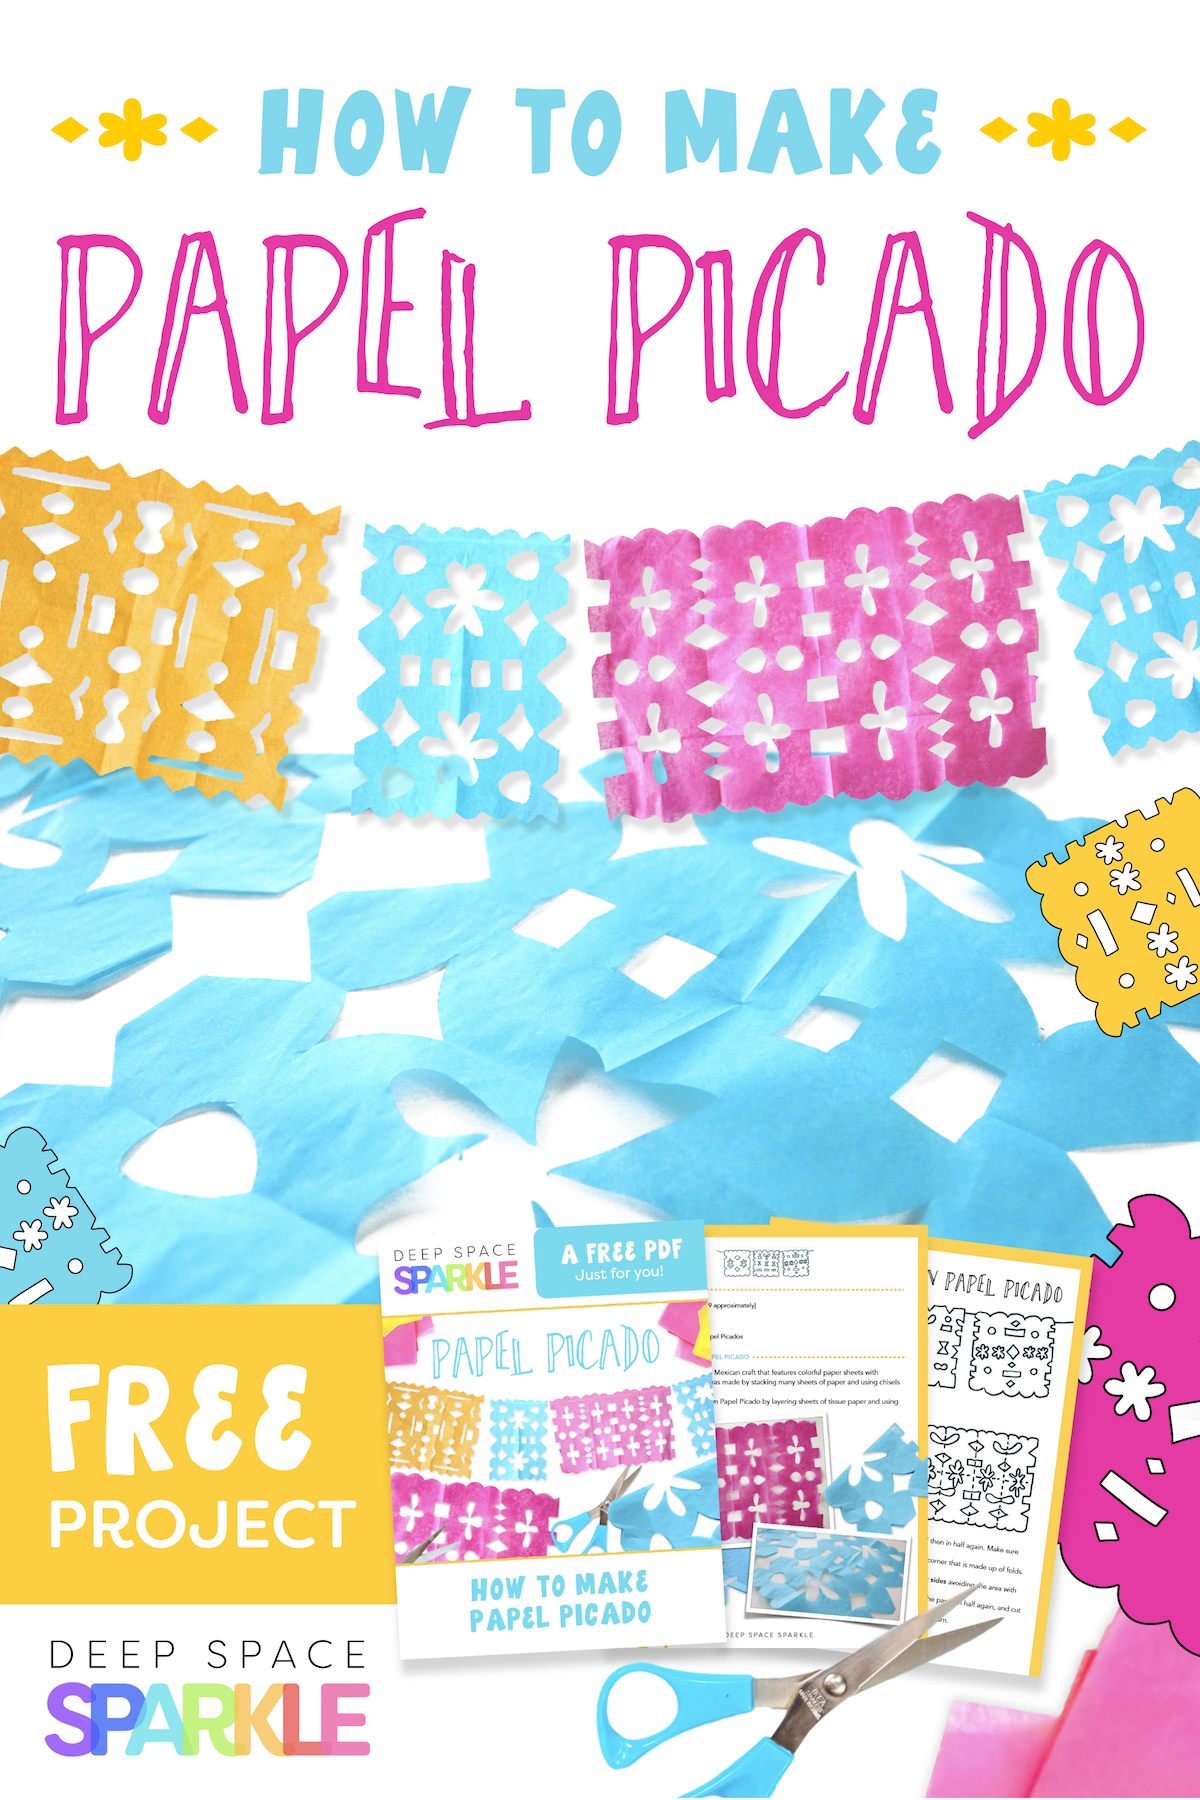 How-to-Make-Papel-Picado-Pinterest.jpg